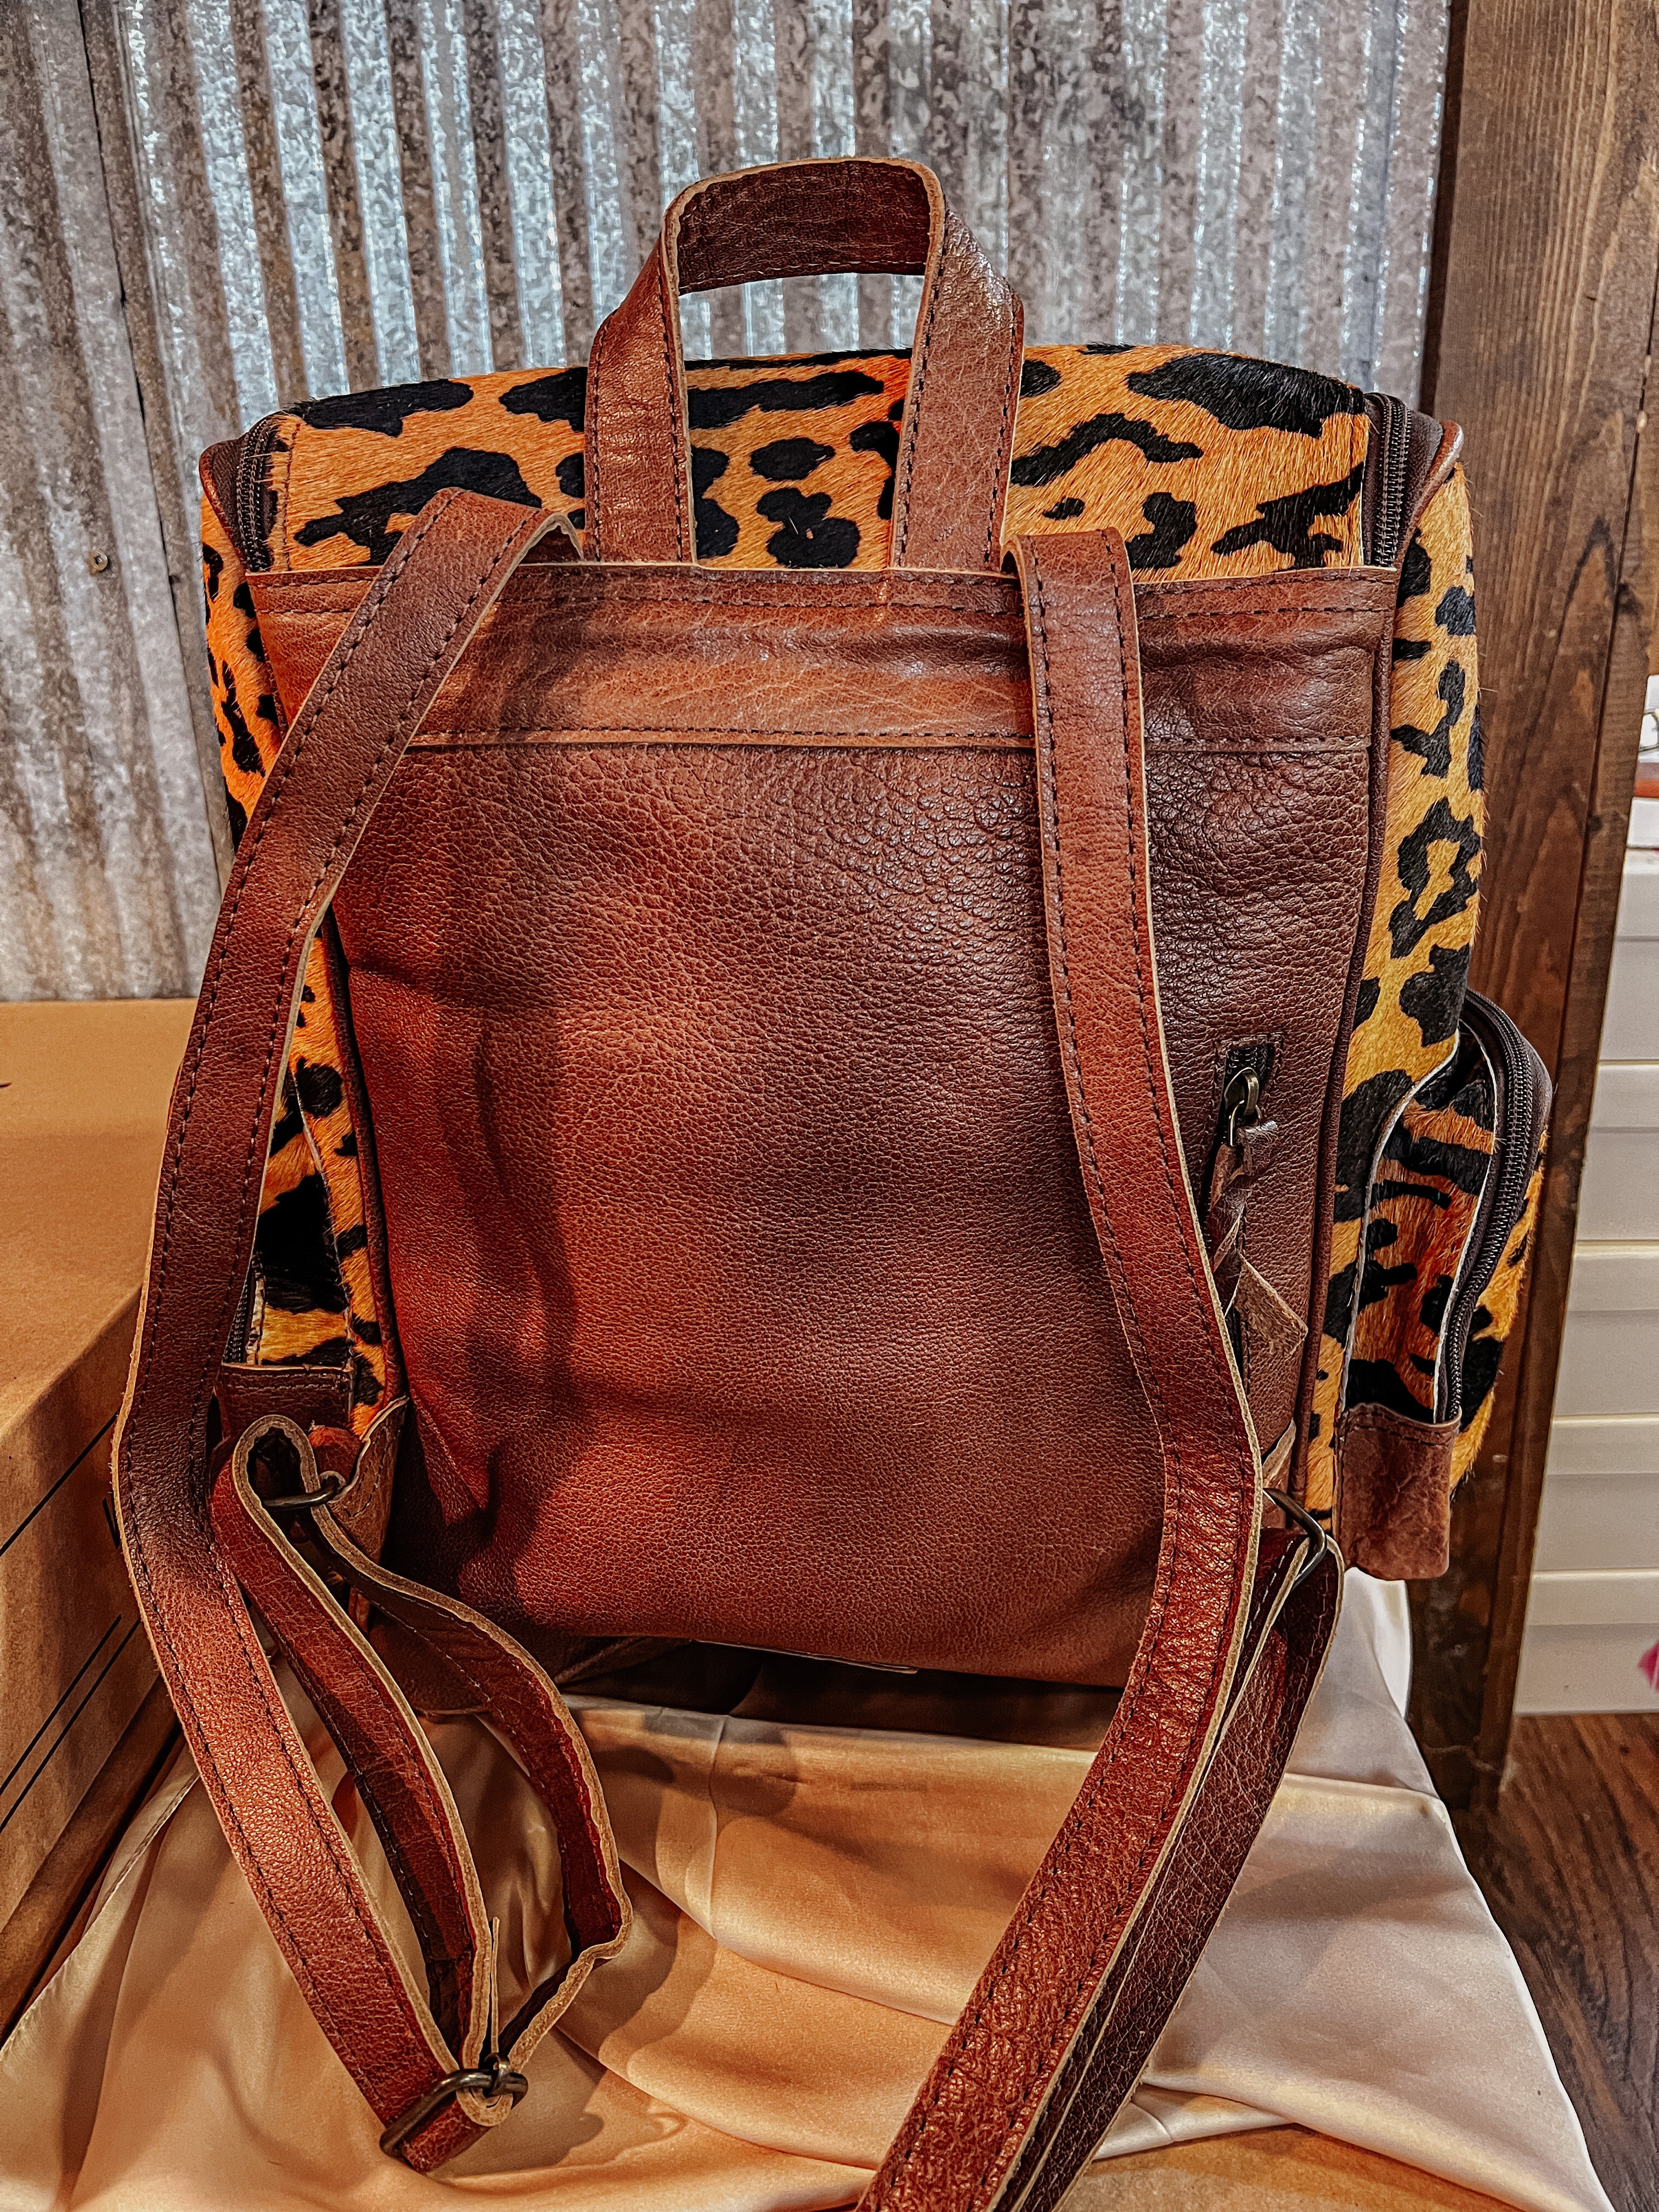 The Azulado Leopard Backpack